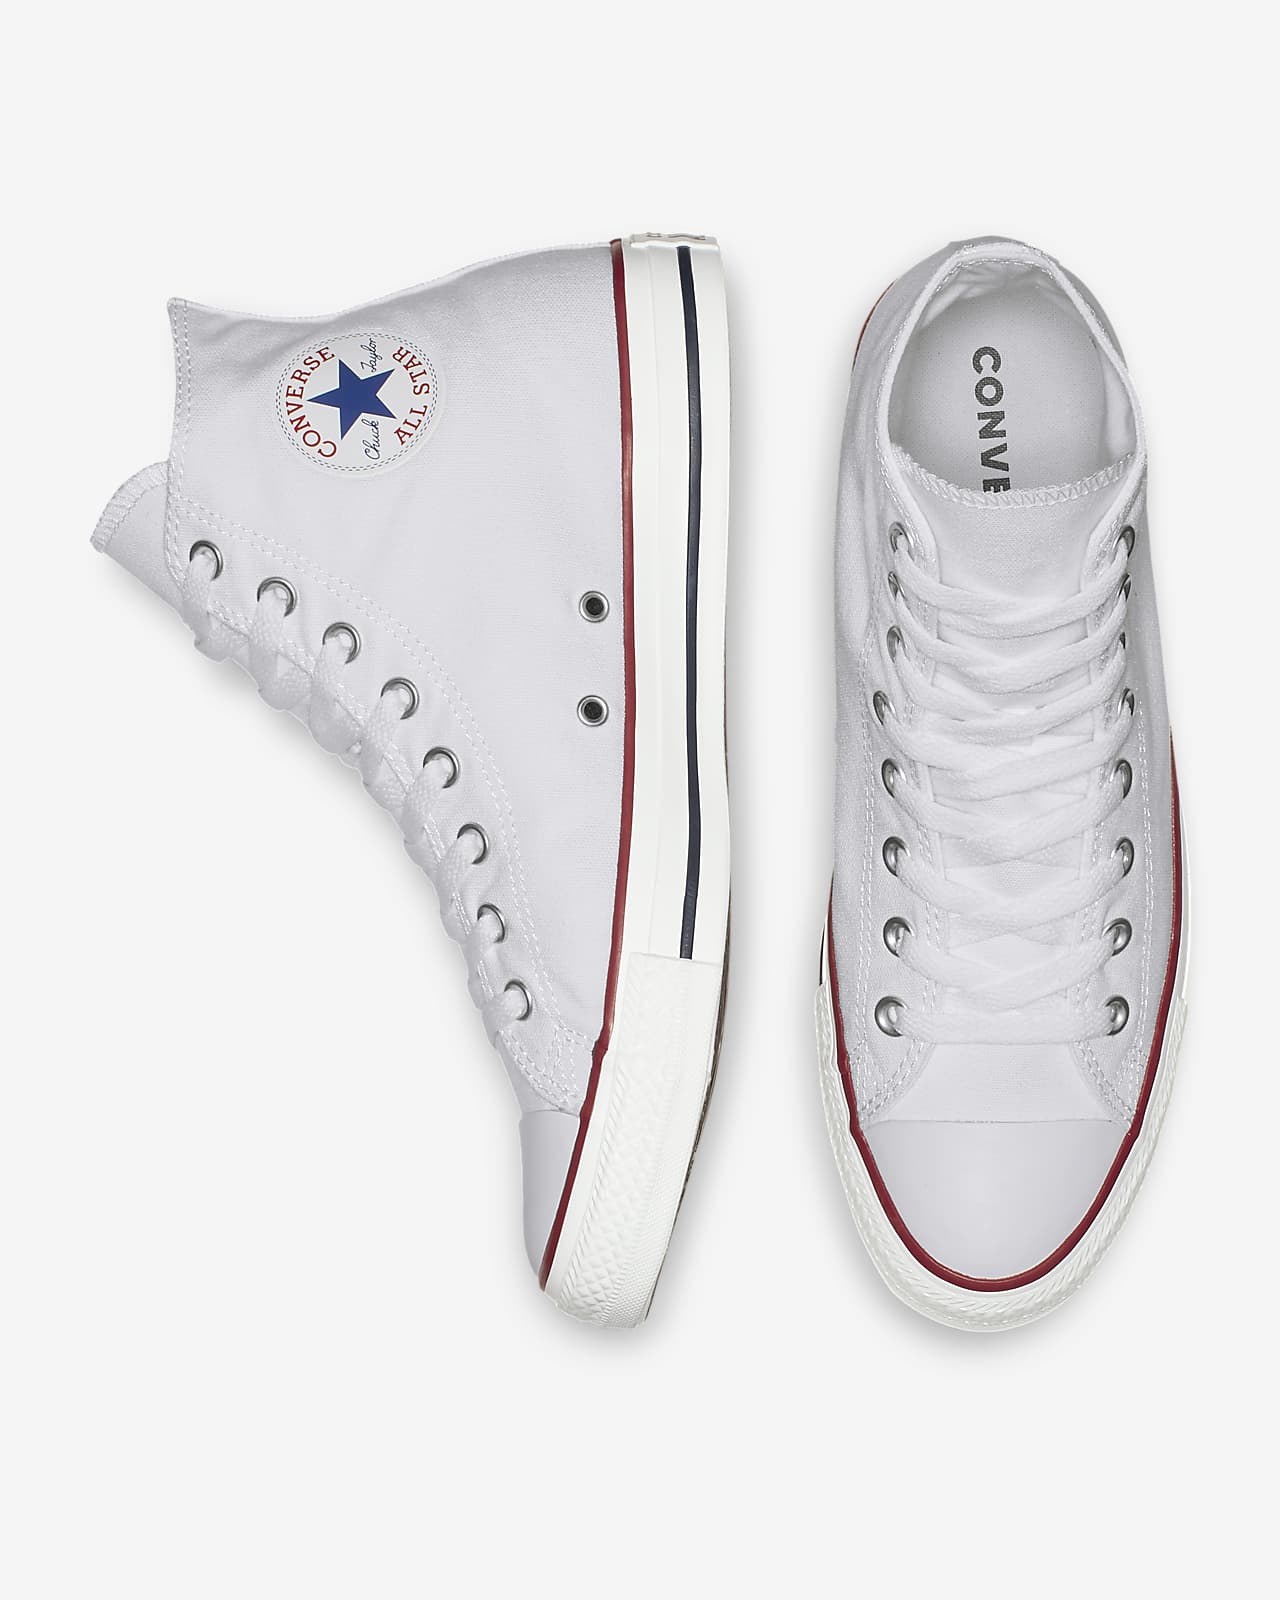 Converse Chuck Taylor All Star High Top Unisex Shoe ايفون ١١ عادي